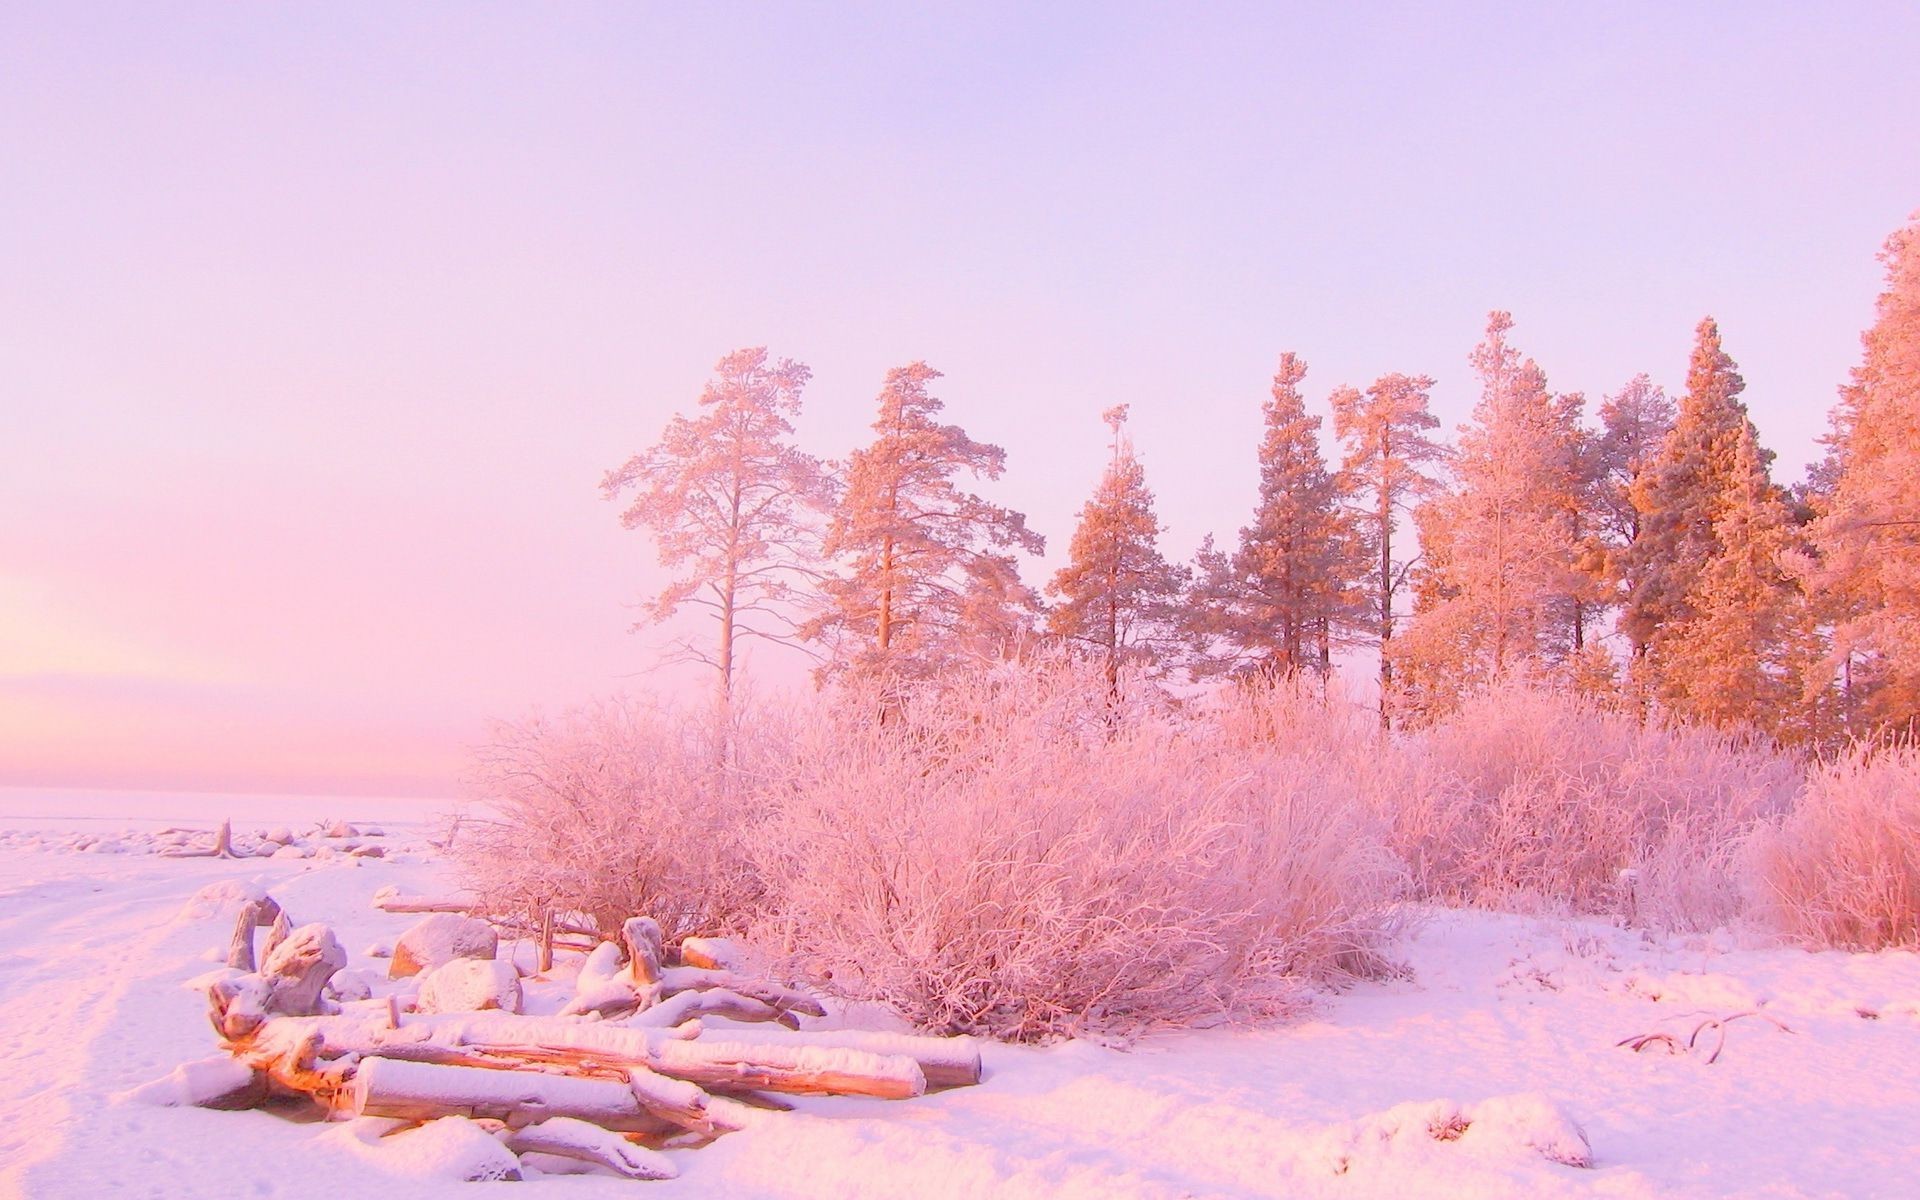 pc壁紙tumblr,冬,空,ピンク,雪,自然の風景